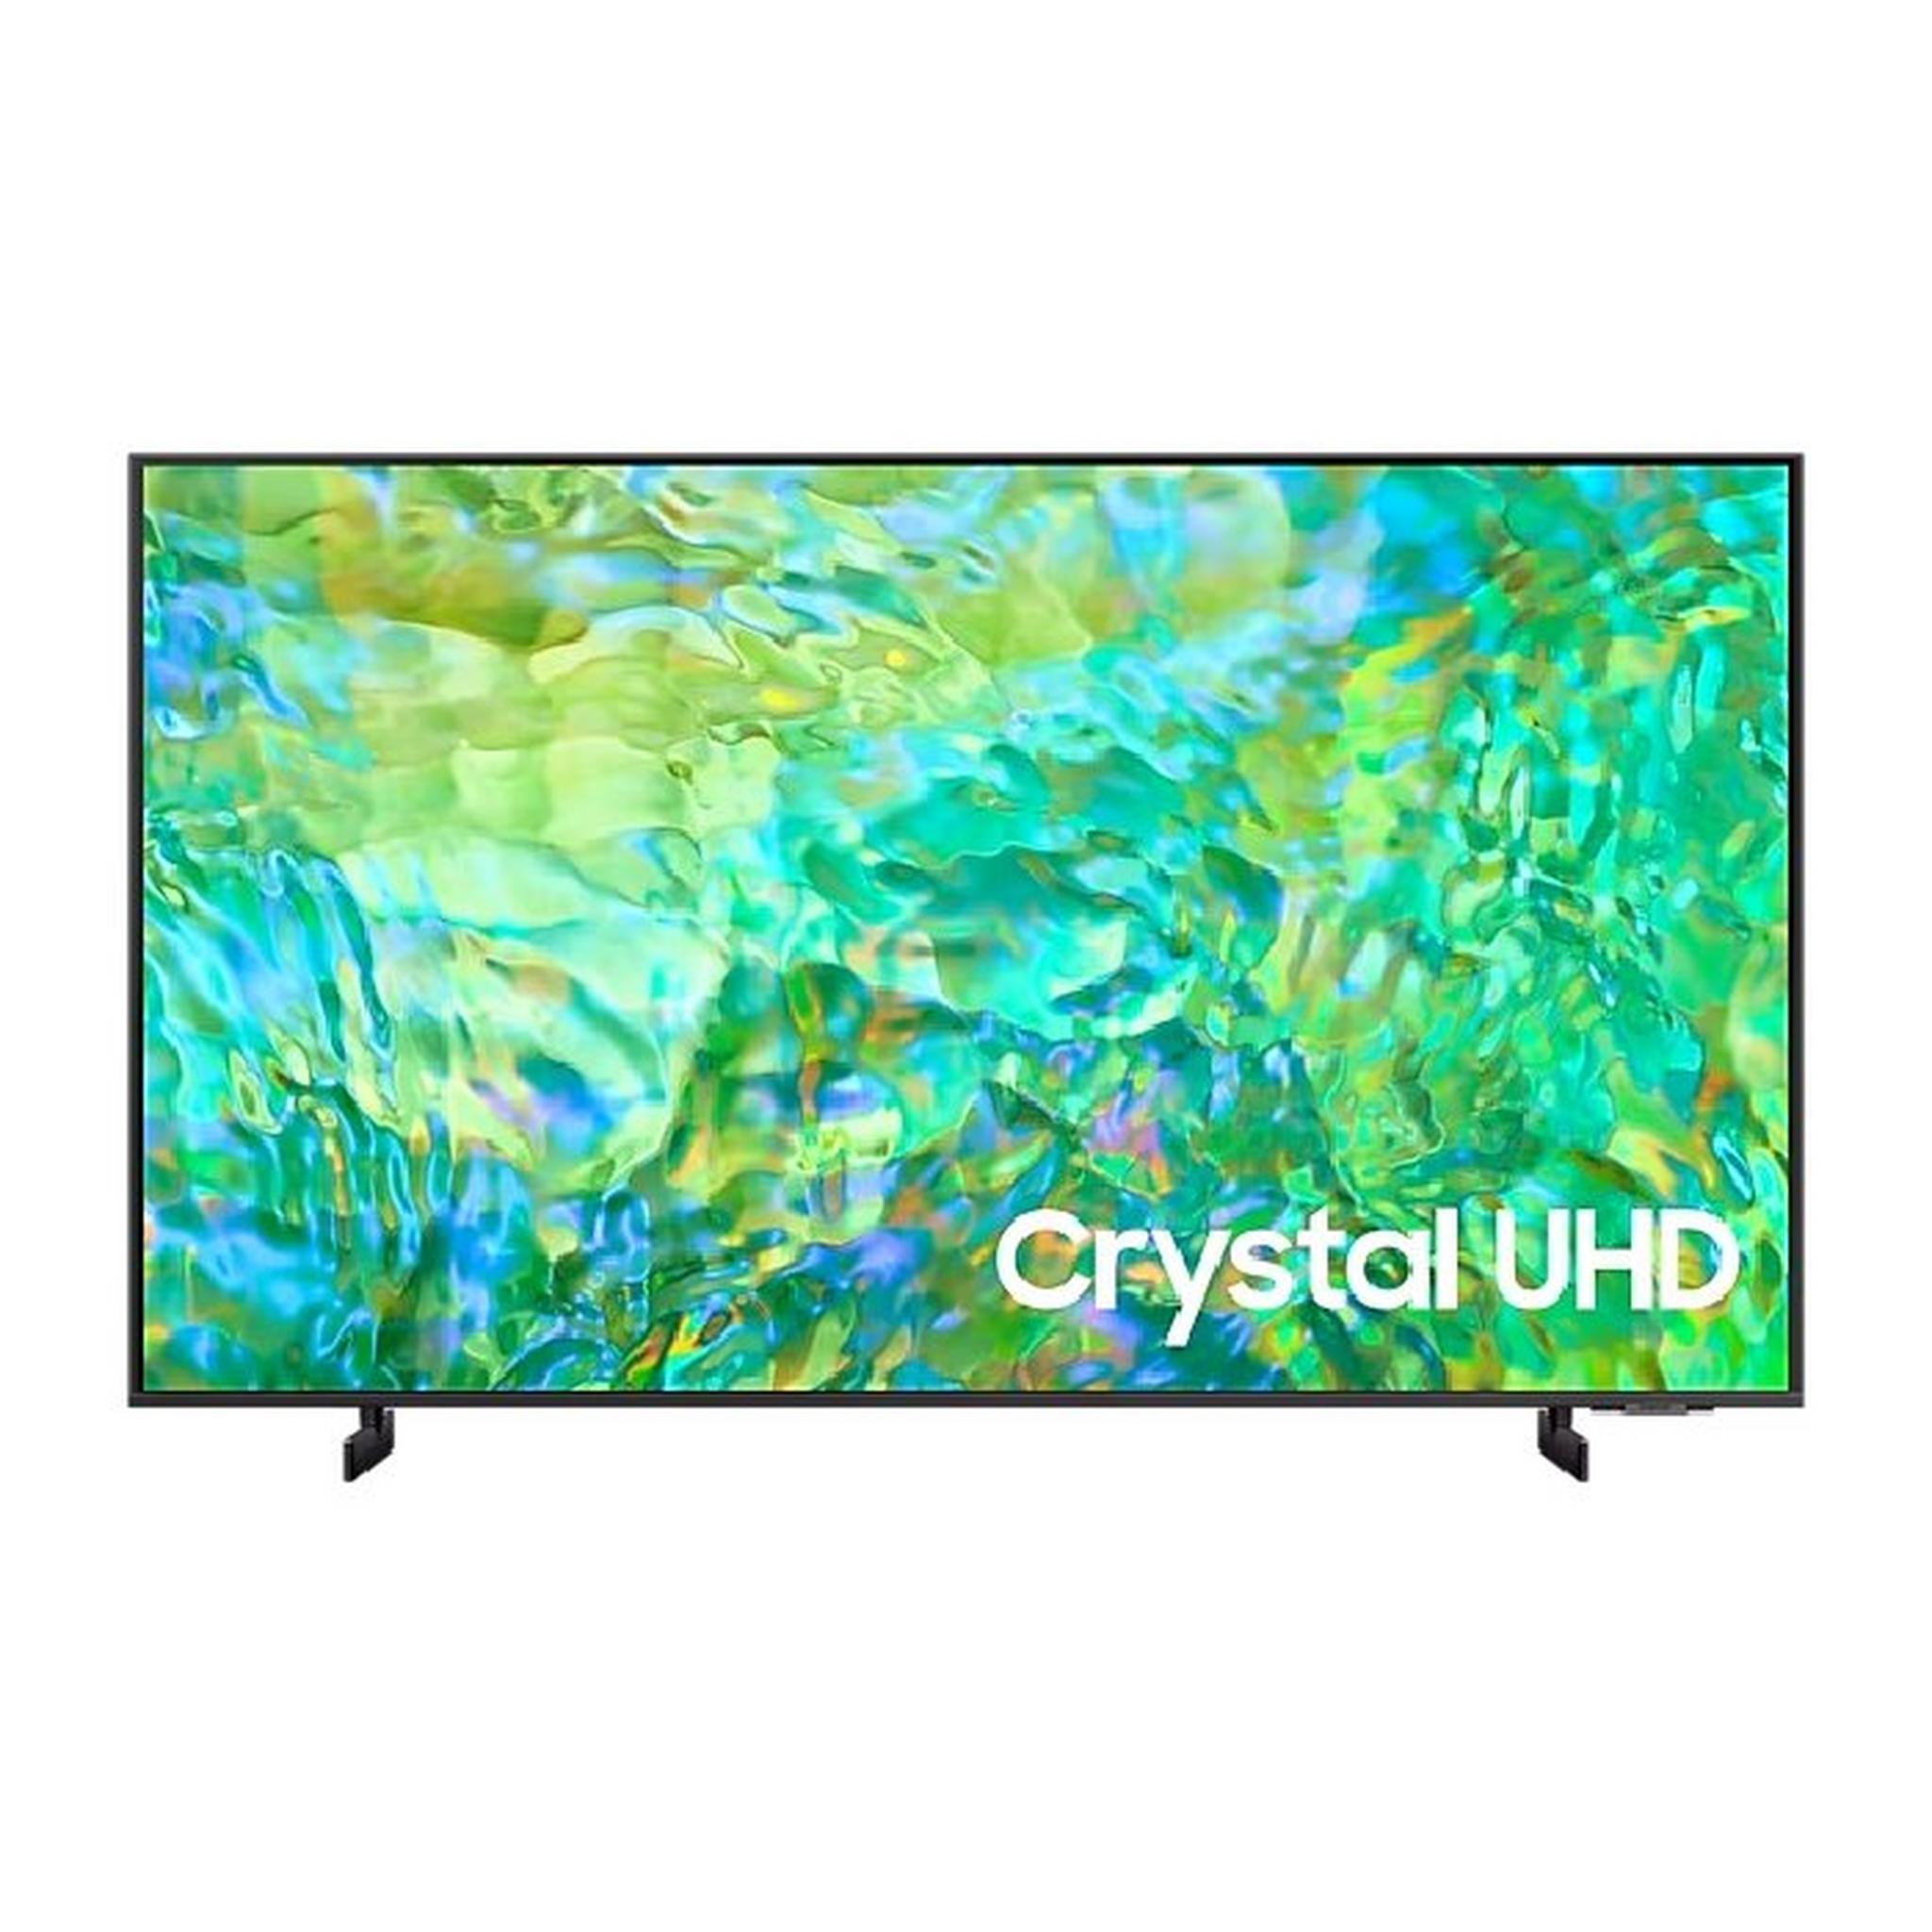 Samsung 43 inch Crystal 4k UHD Smart TV, UA43CU8000UXSA – Black